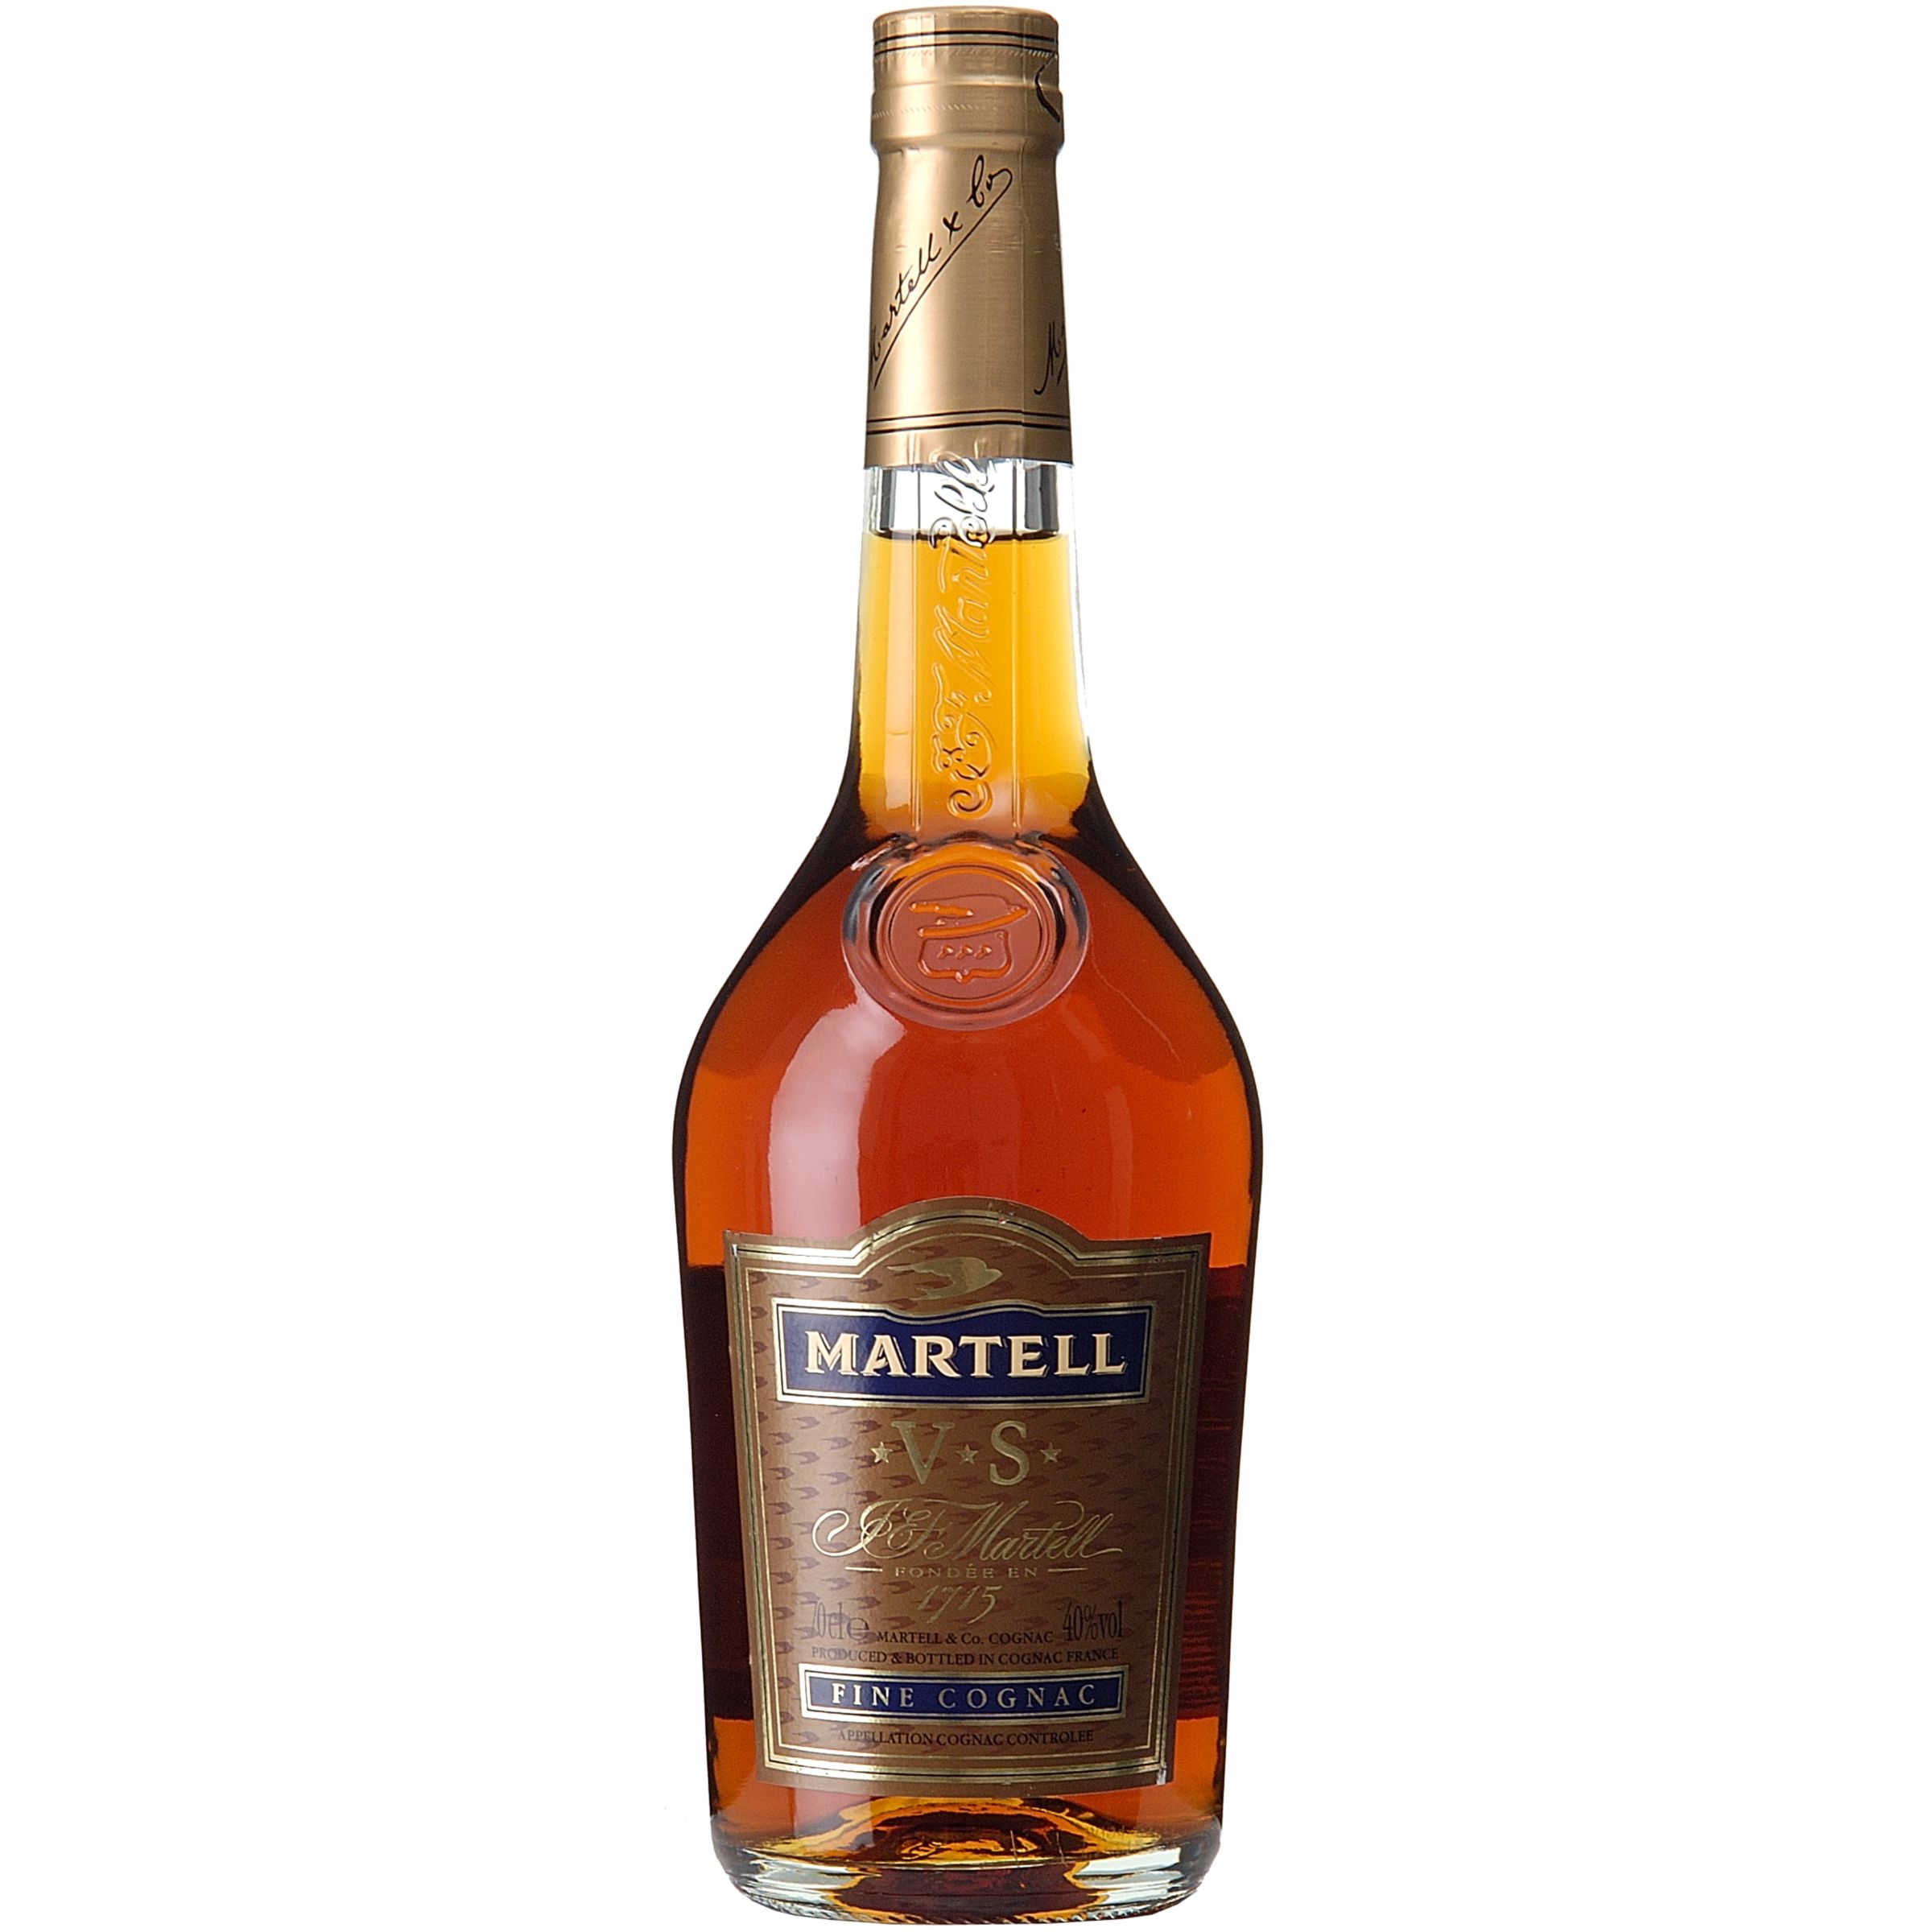 Martell VS Cognac at John Lewis